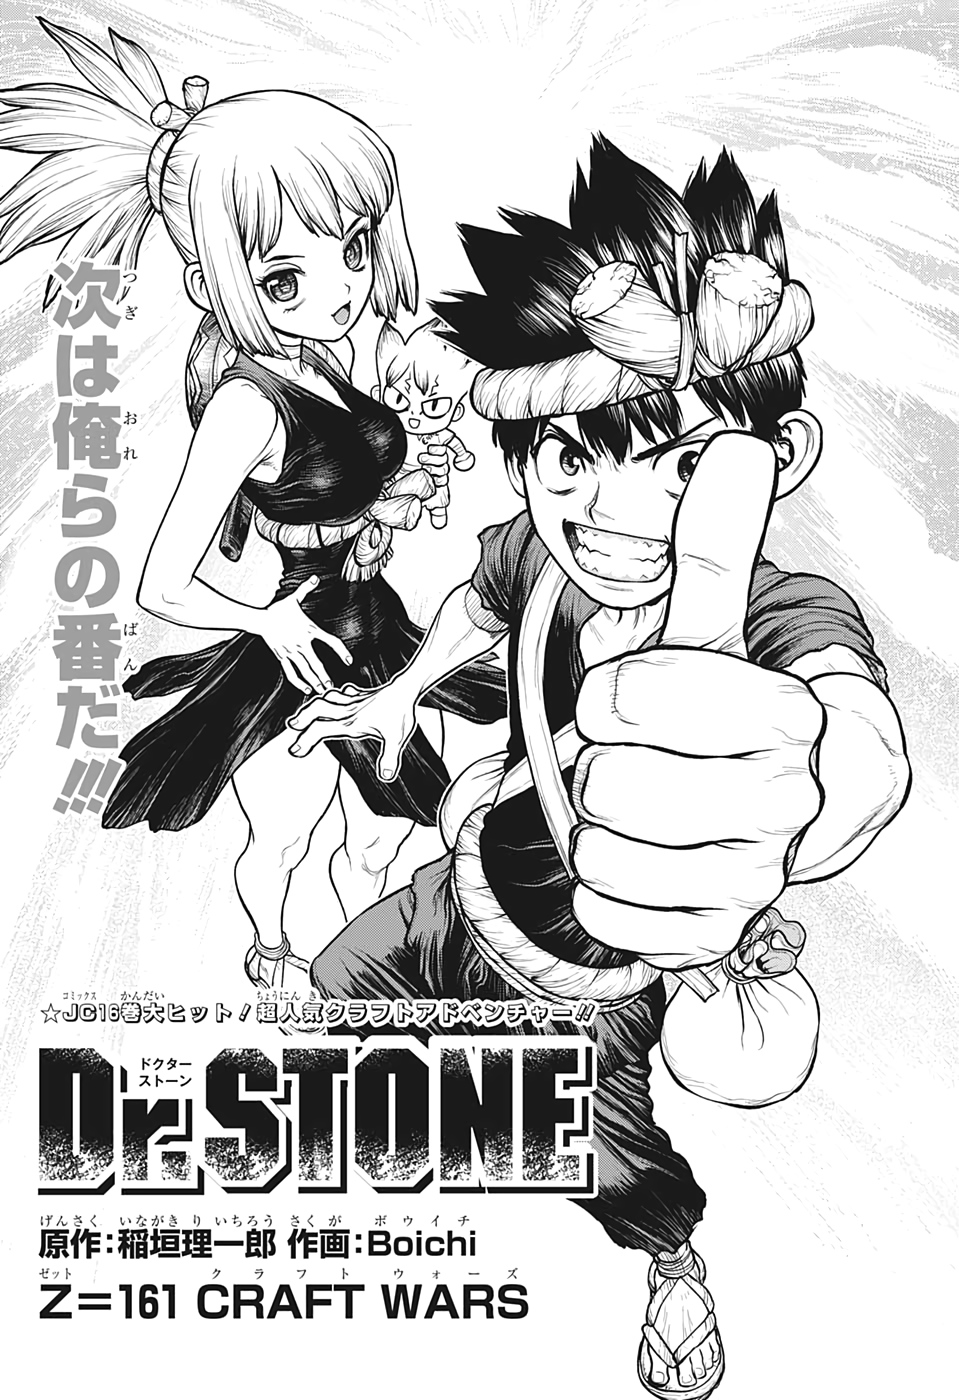 Dr. Stone Capítulo 141 - Manga Online